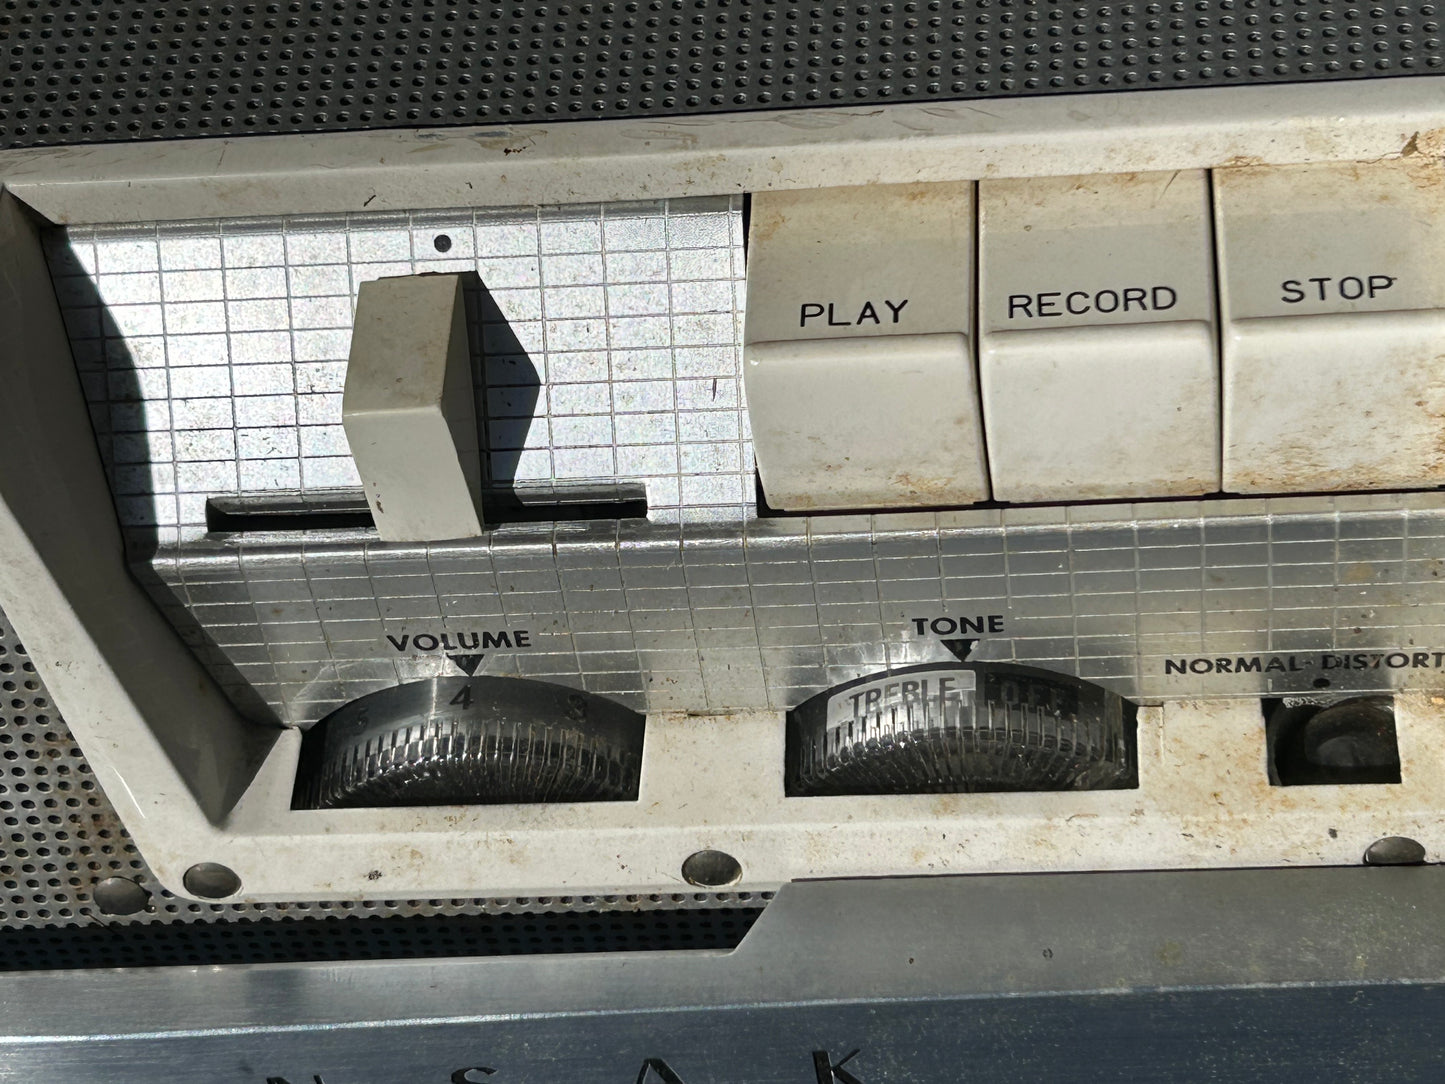 Vintage Wollensak Tape Recorder